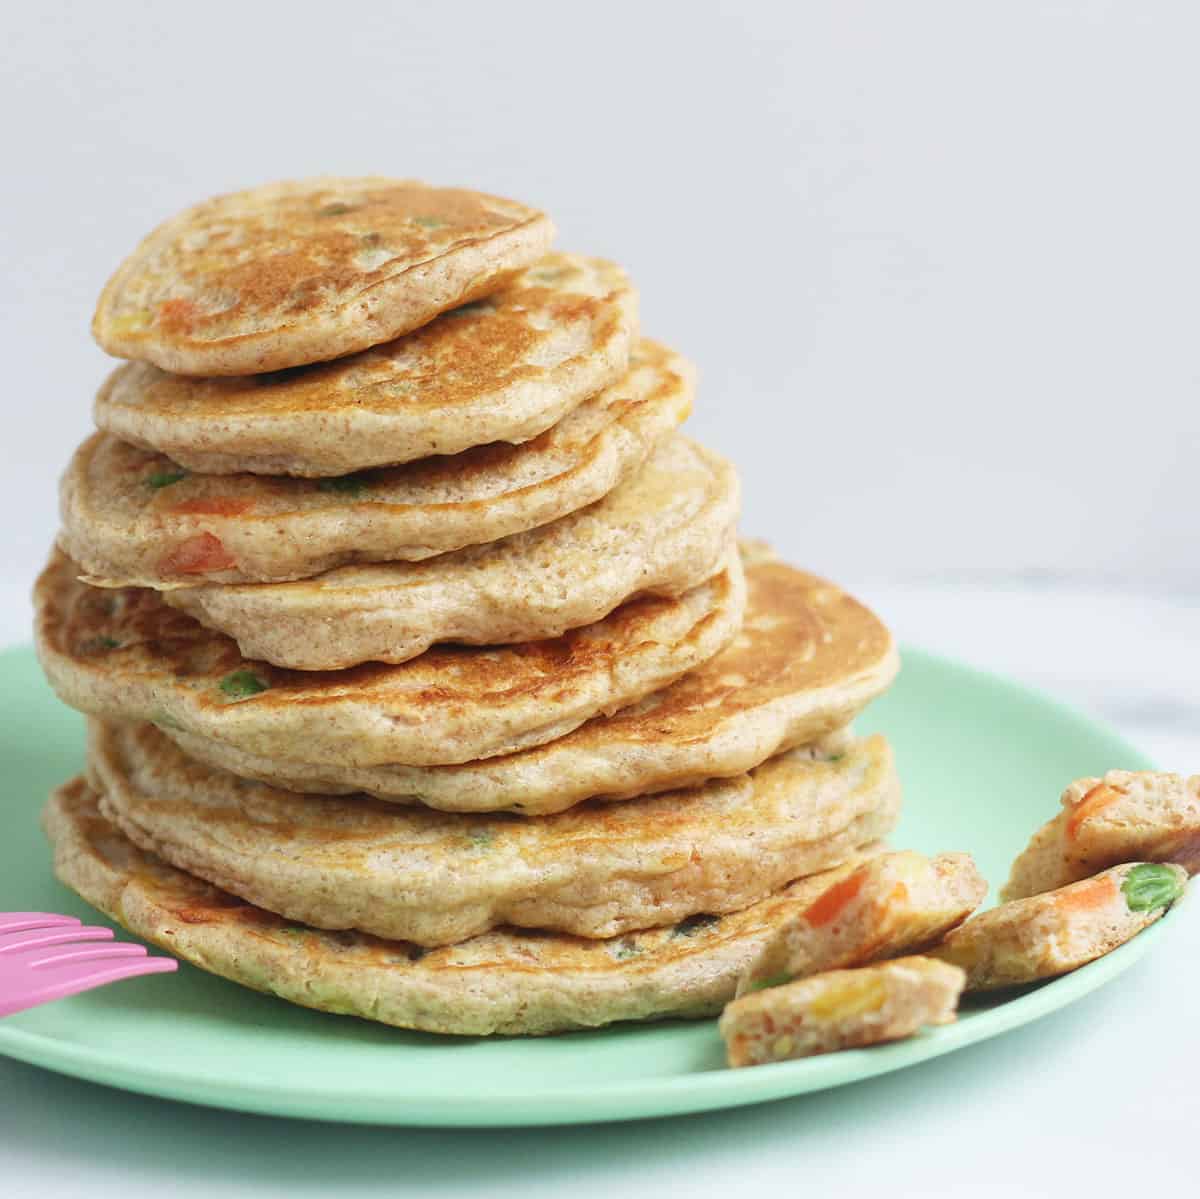 How to make pancakes without baking powder